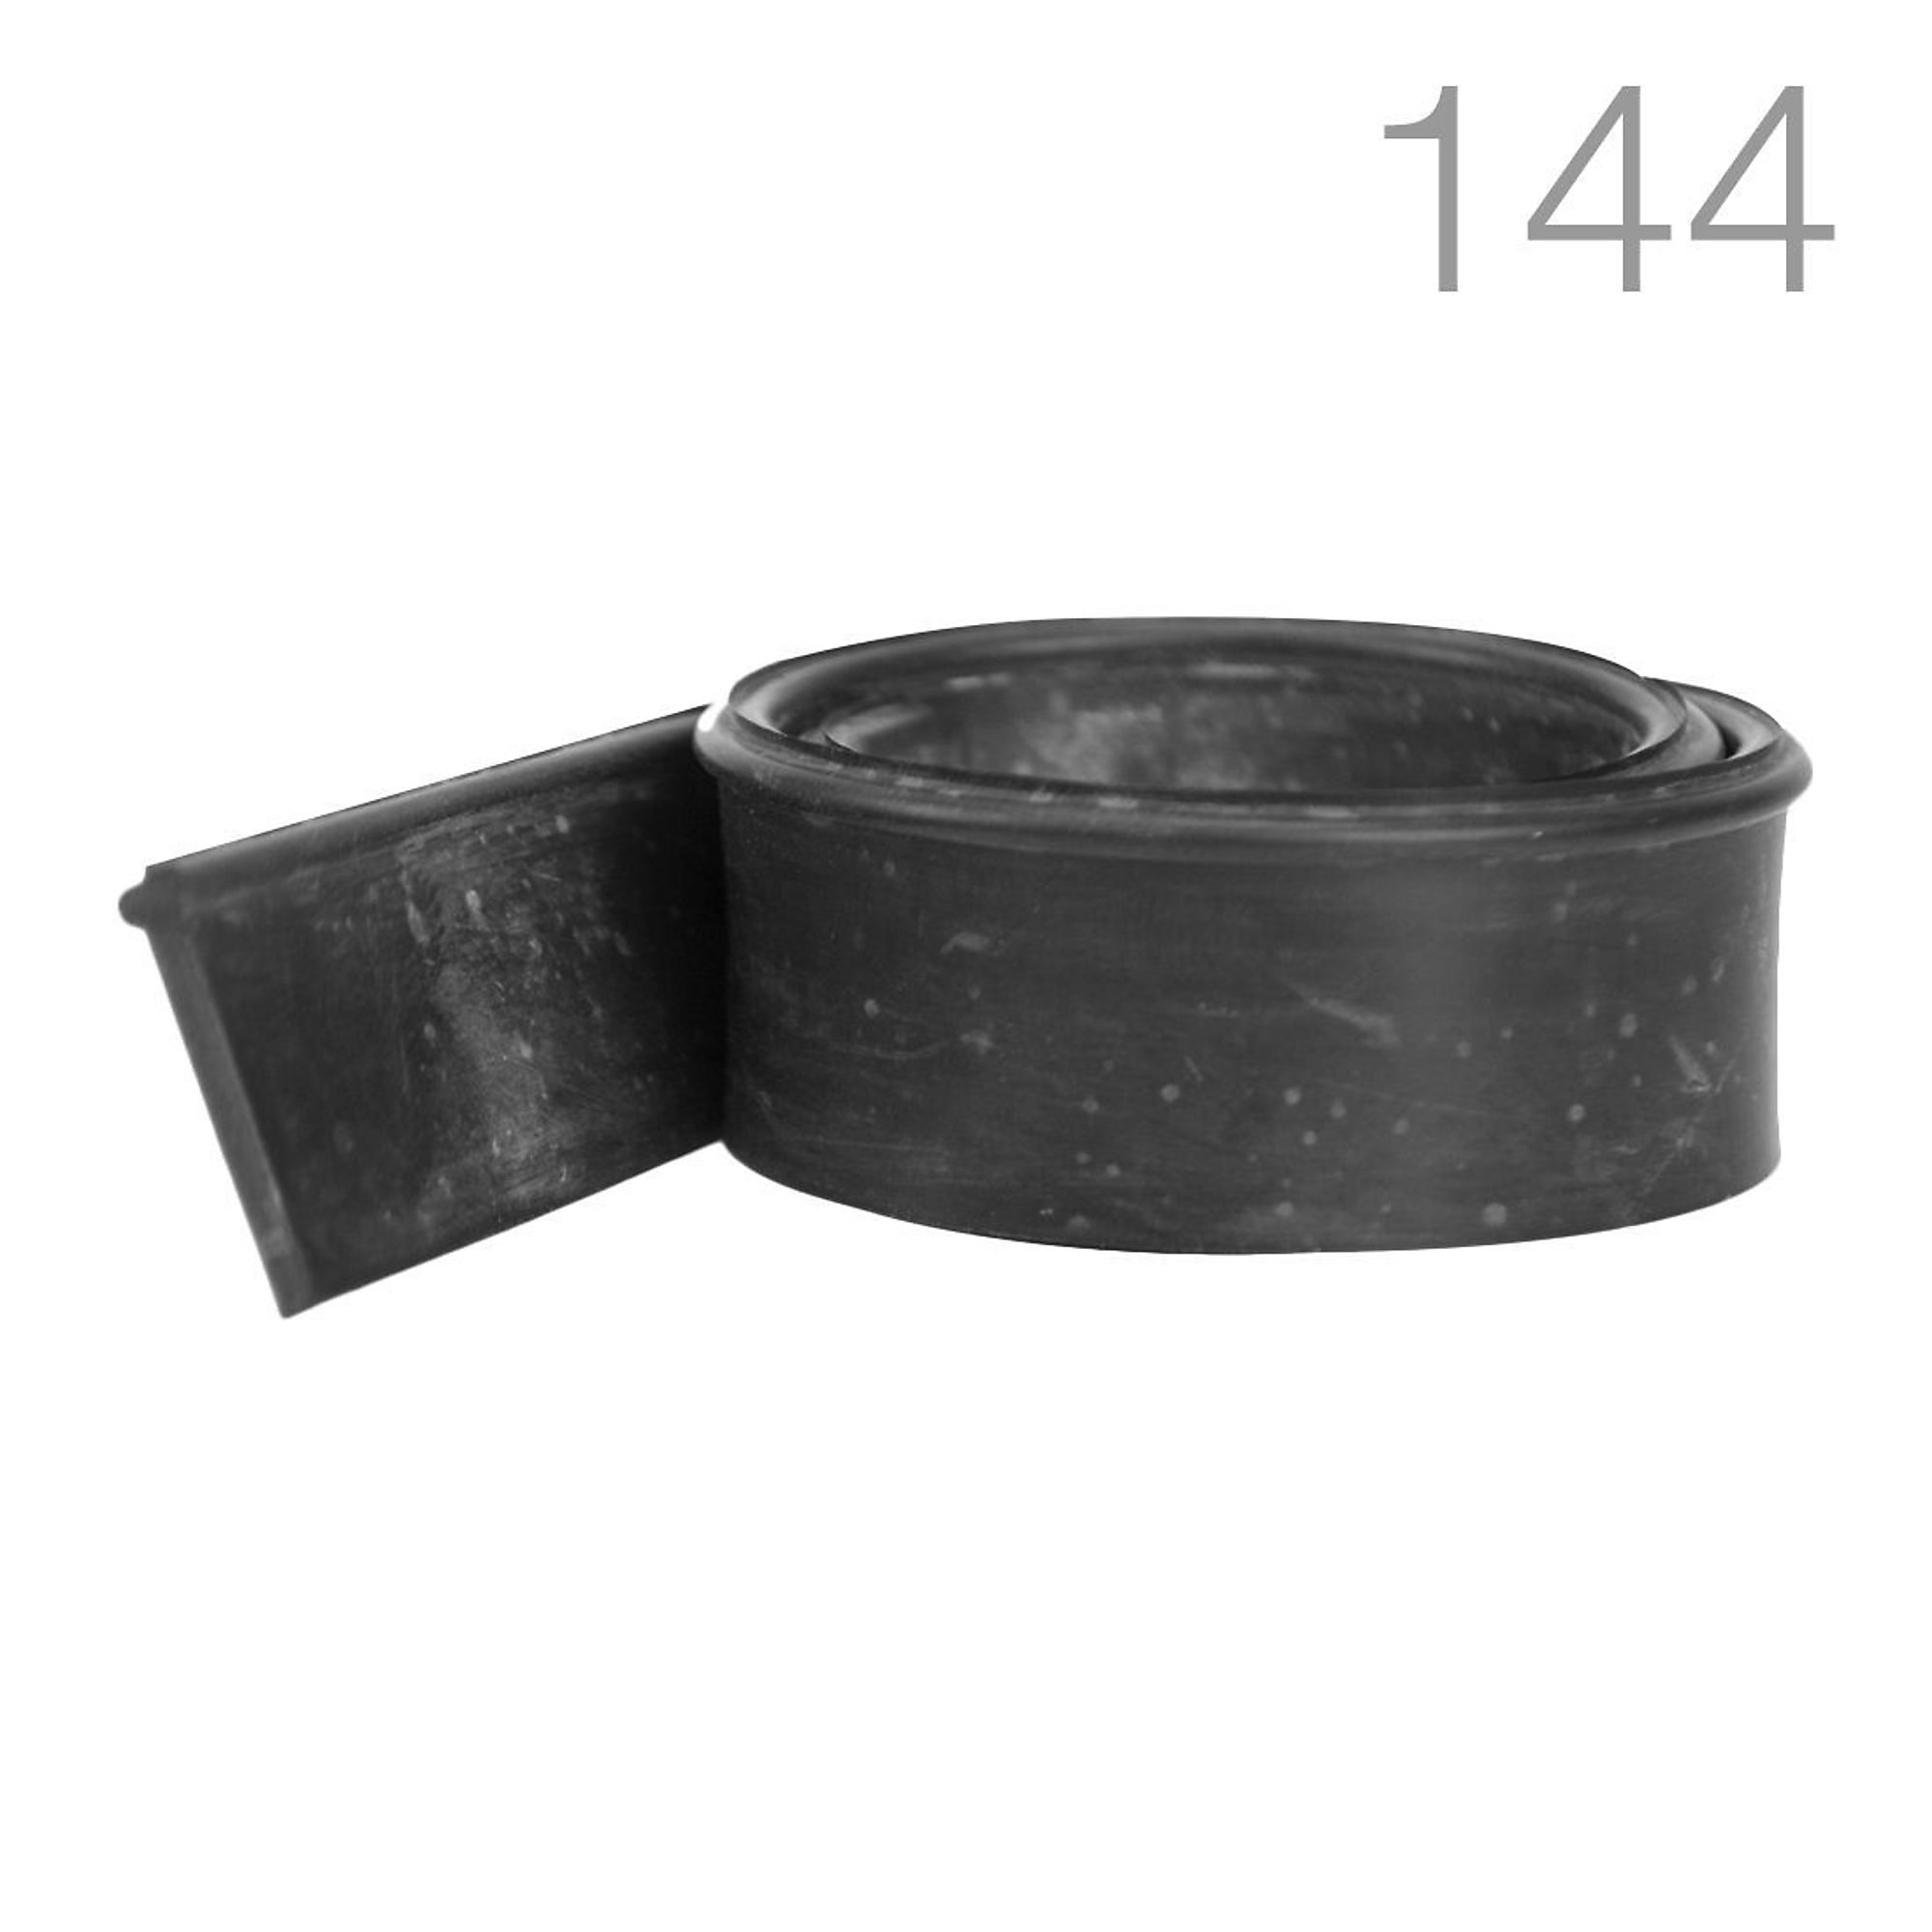 BlackDiamond, Flat Top Medium Squeegee Rubber Gross - 16Inch, Model 012-05-58